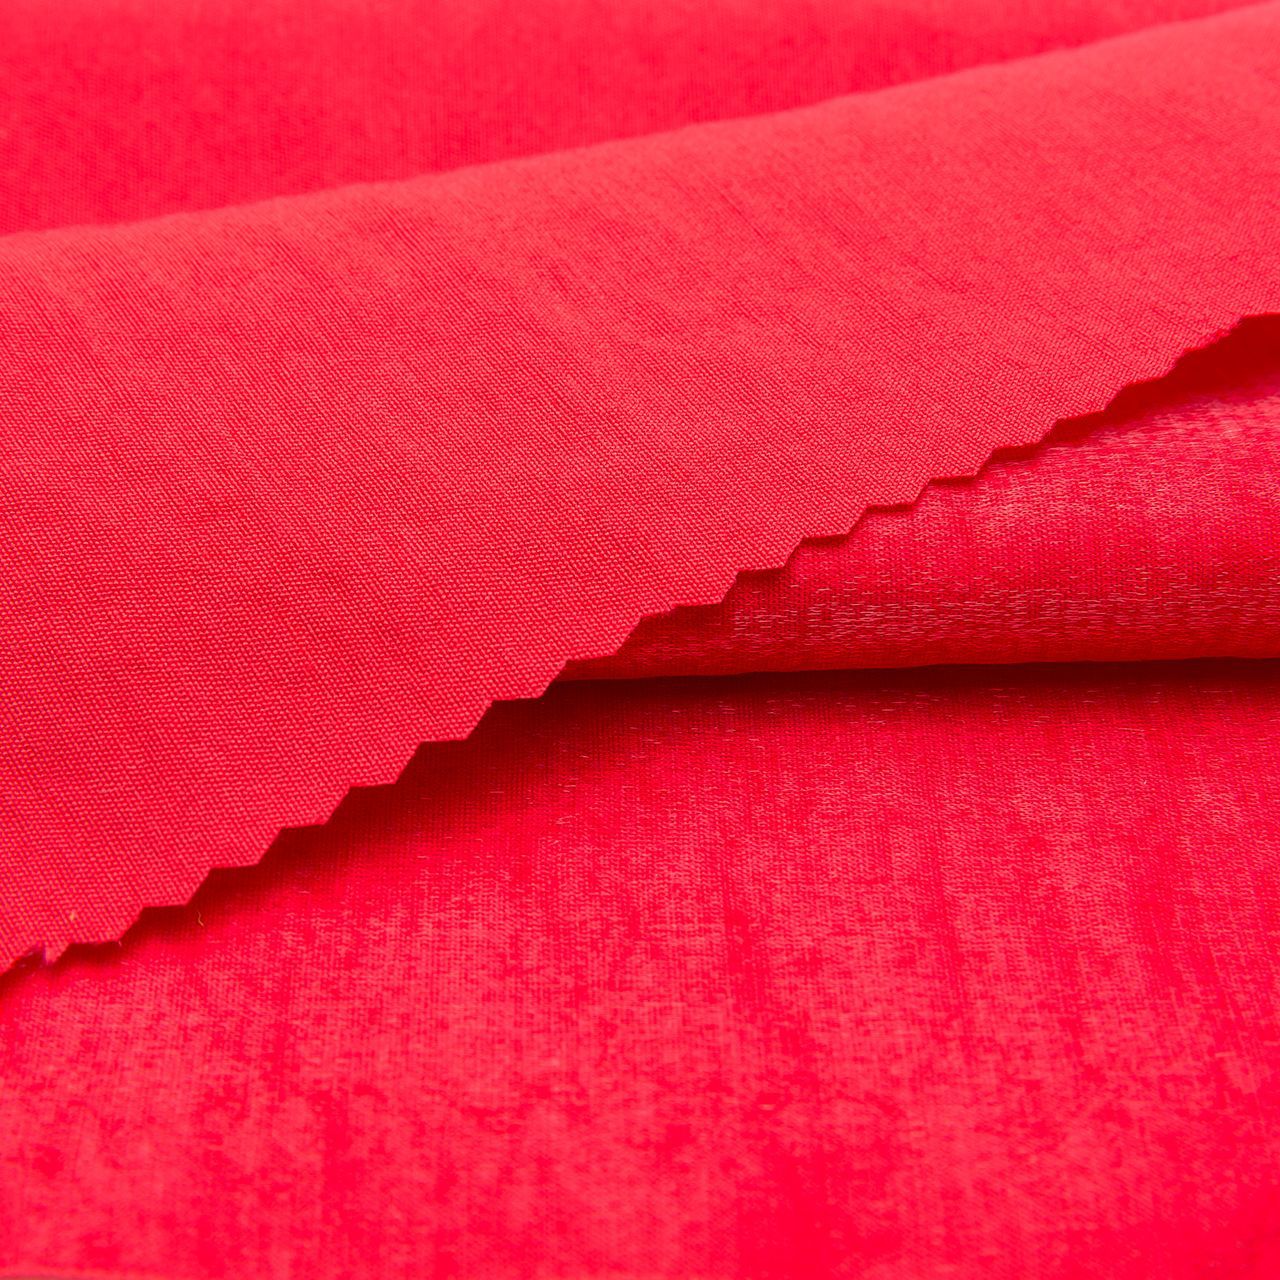 Spot Thickened Bright Silk Brocade Cotton Satin Flash Silk Fabric Women's Metallic Cotton Clothes Festive Red Envelope Luggage Cushion